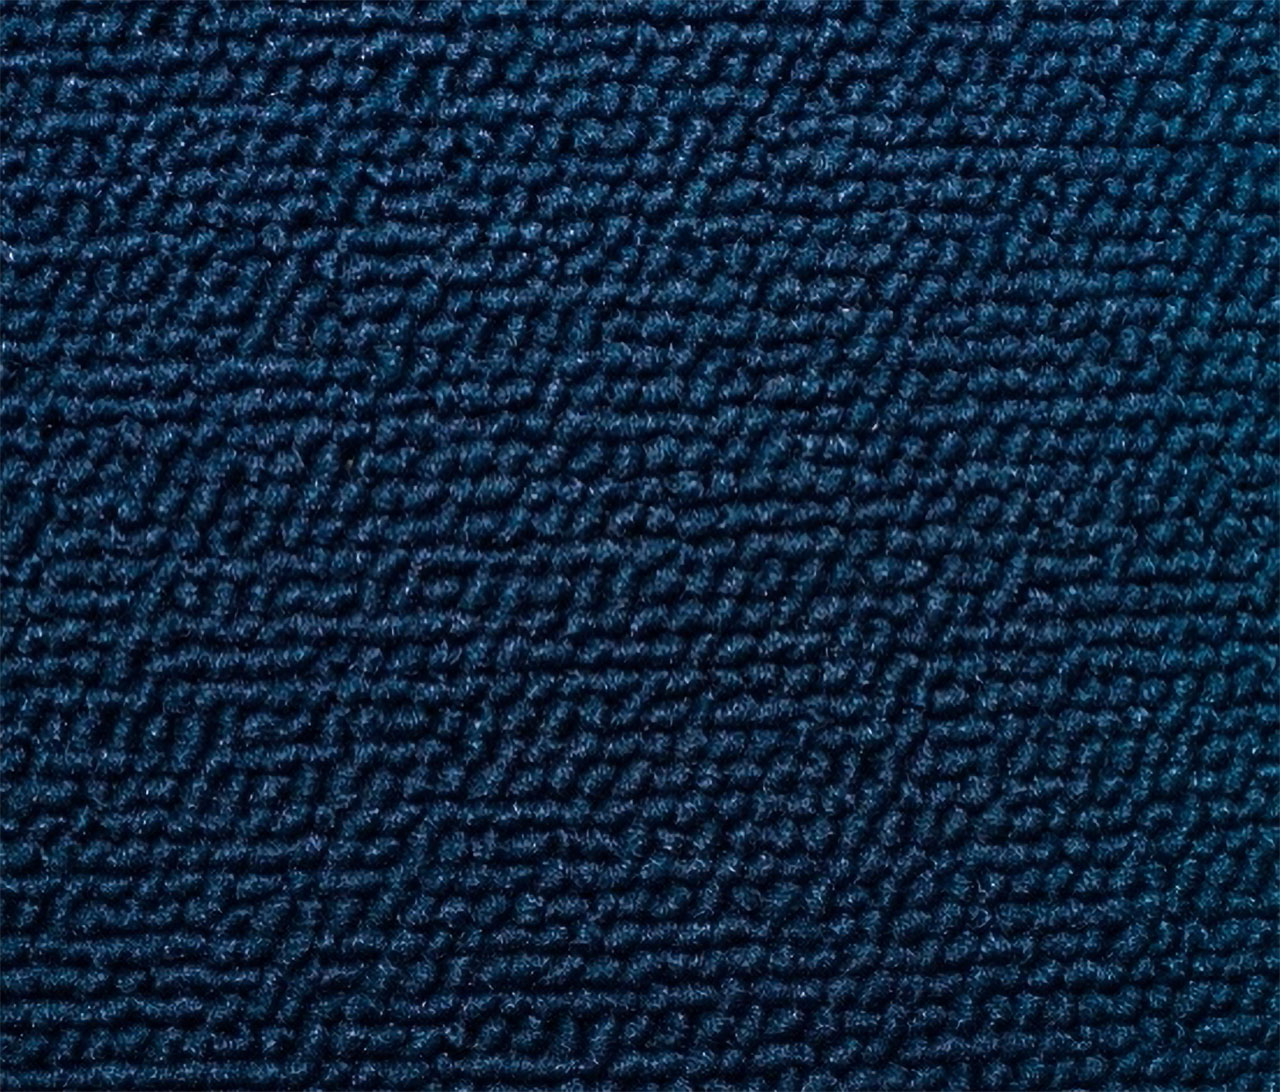 Holden Special EH Special Sedan C31 Saxe & Columbine Blue Carpet (Image 1 of 1)